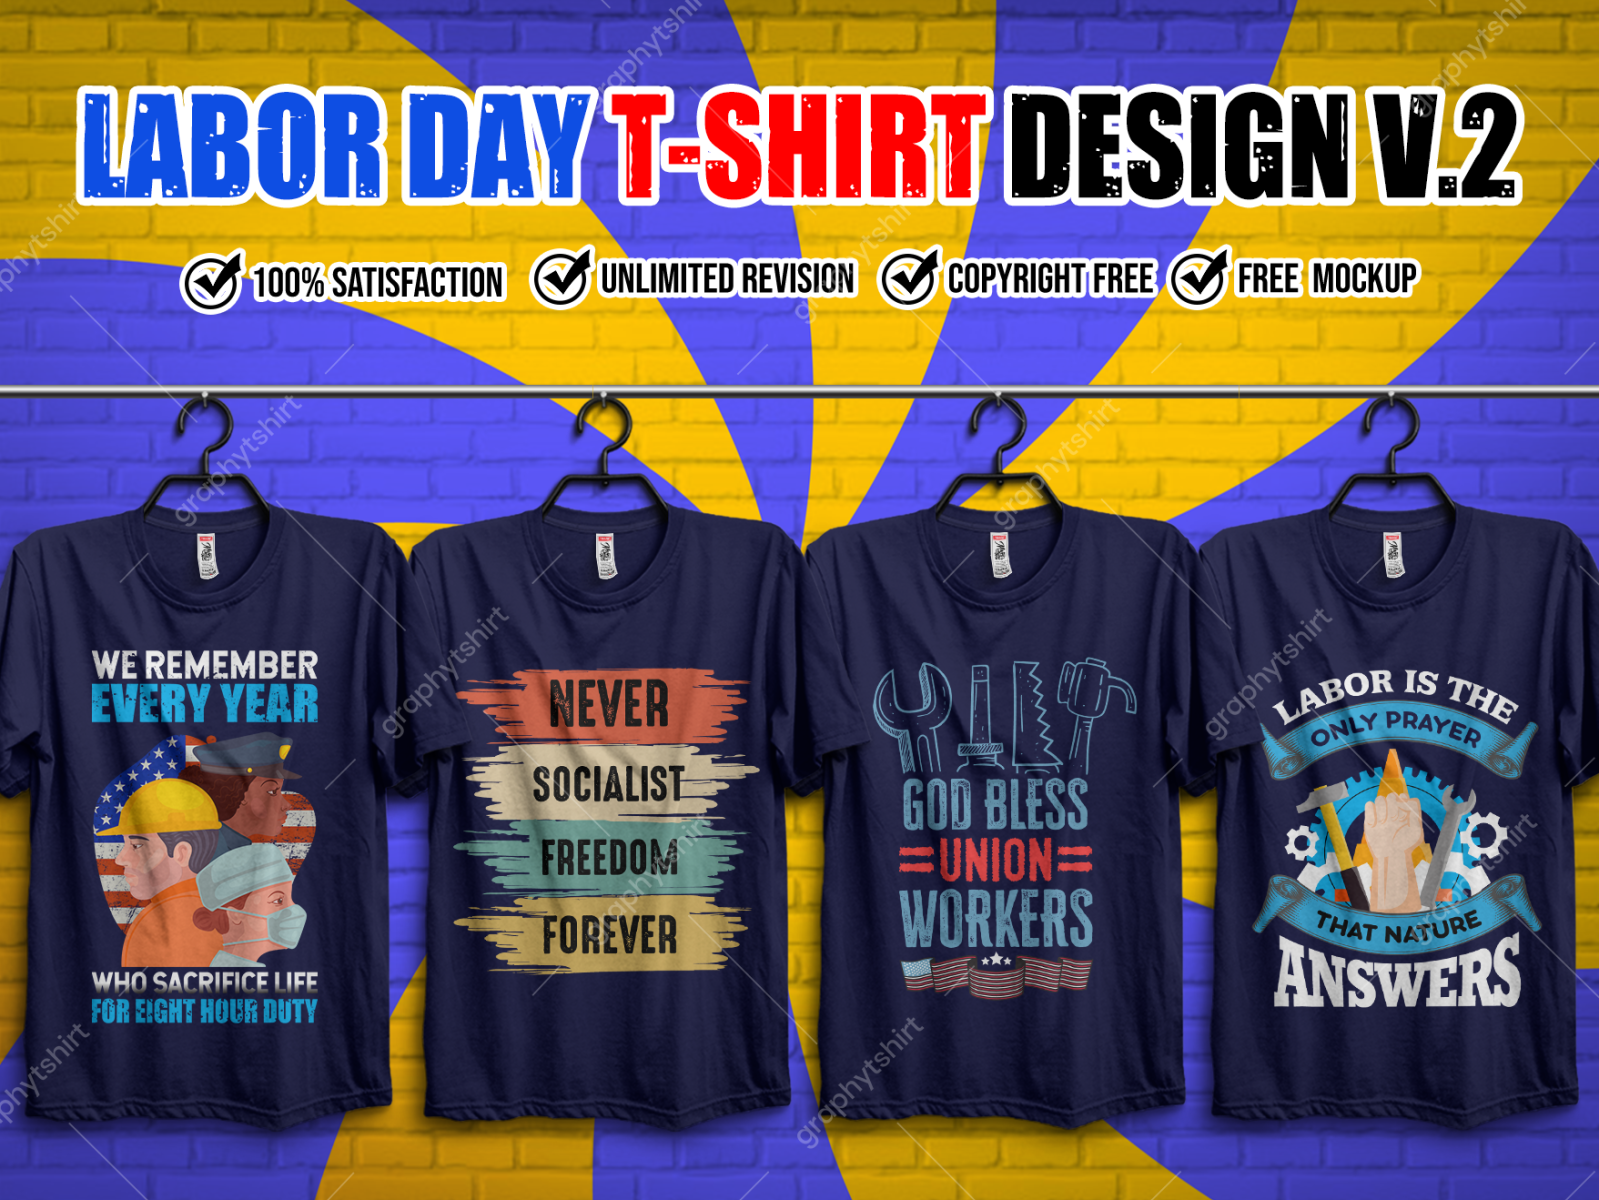 USA Labor Day T-Shirt Design Bundle V-2.0 by Md Sahjahan Rabi on Dribbble